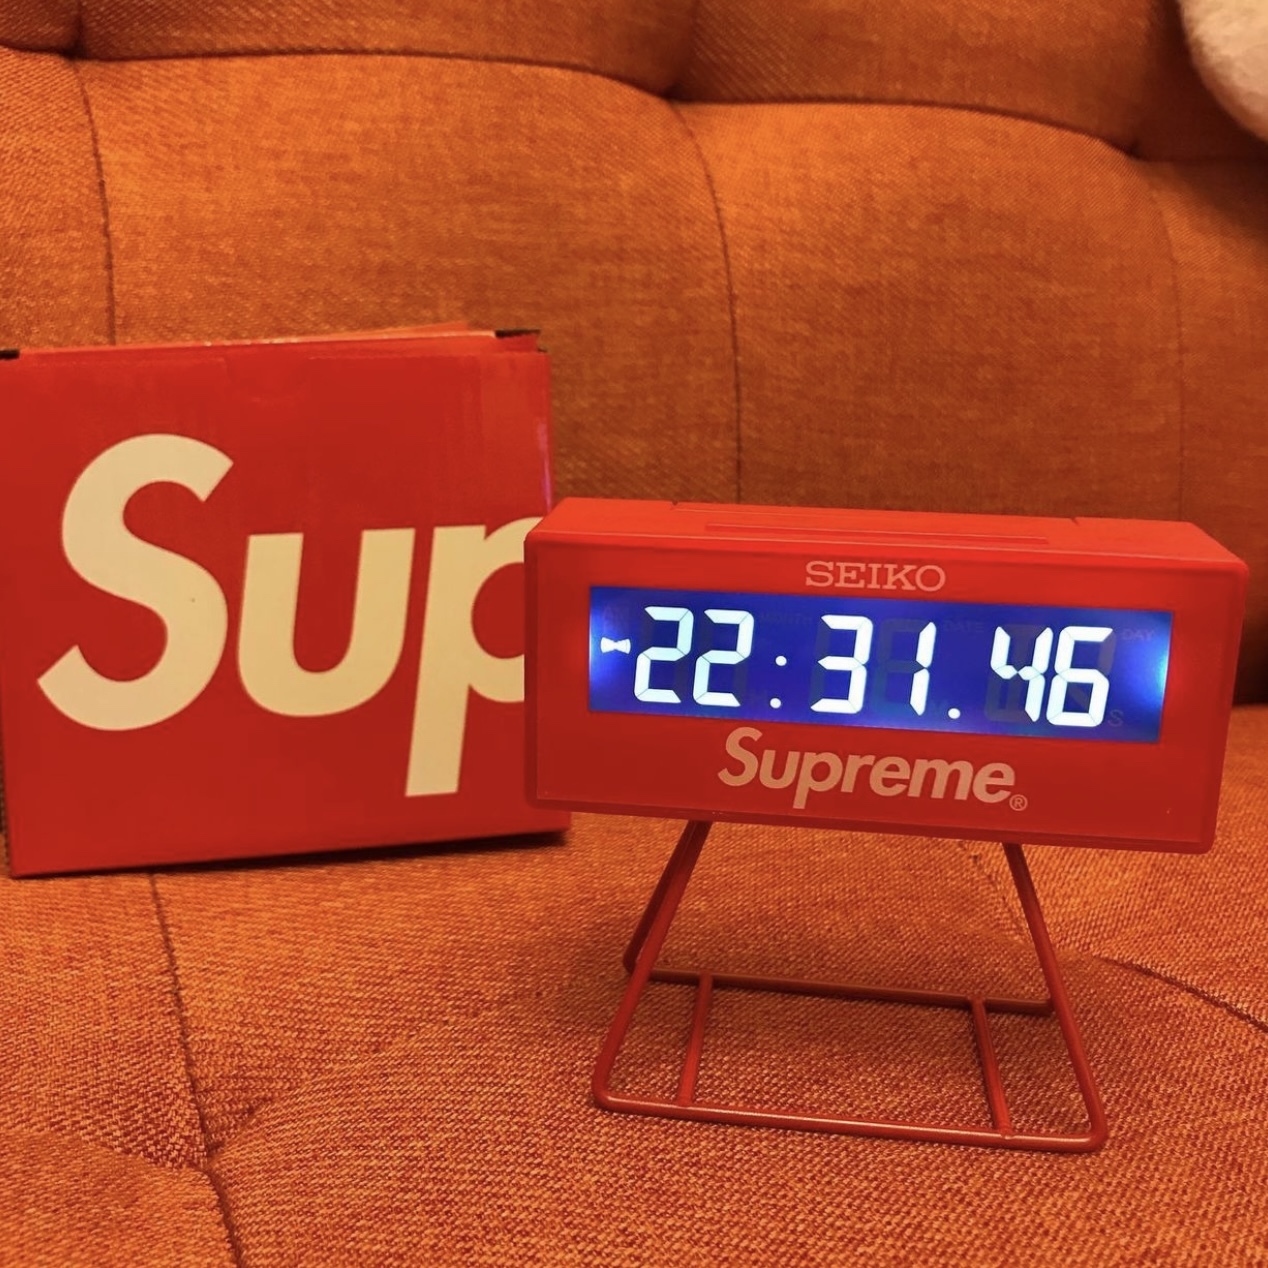 Supreme / Seiko Marathon Clock 